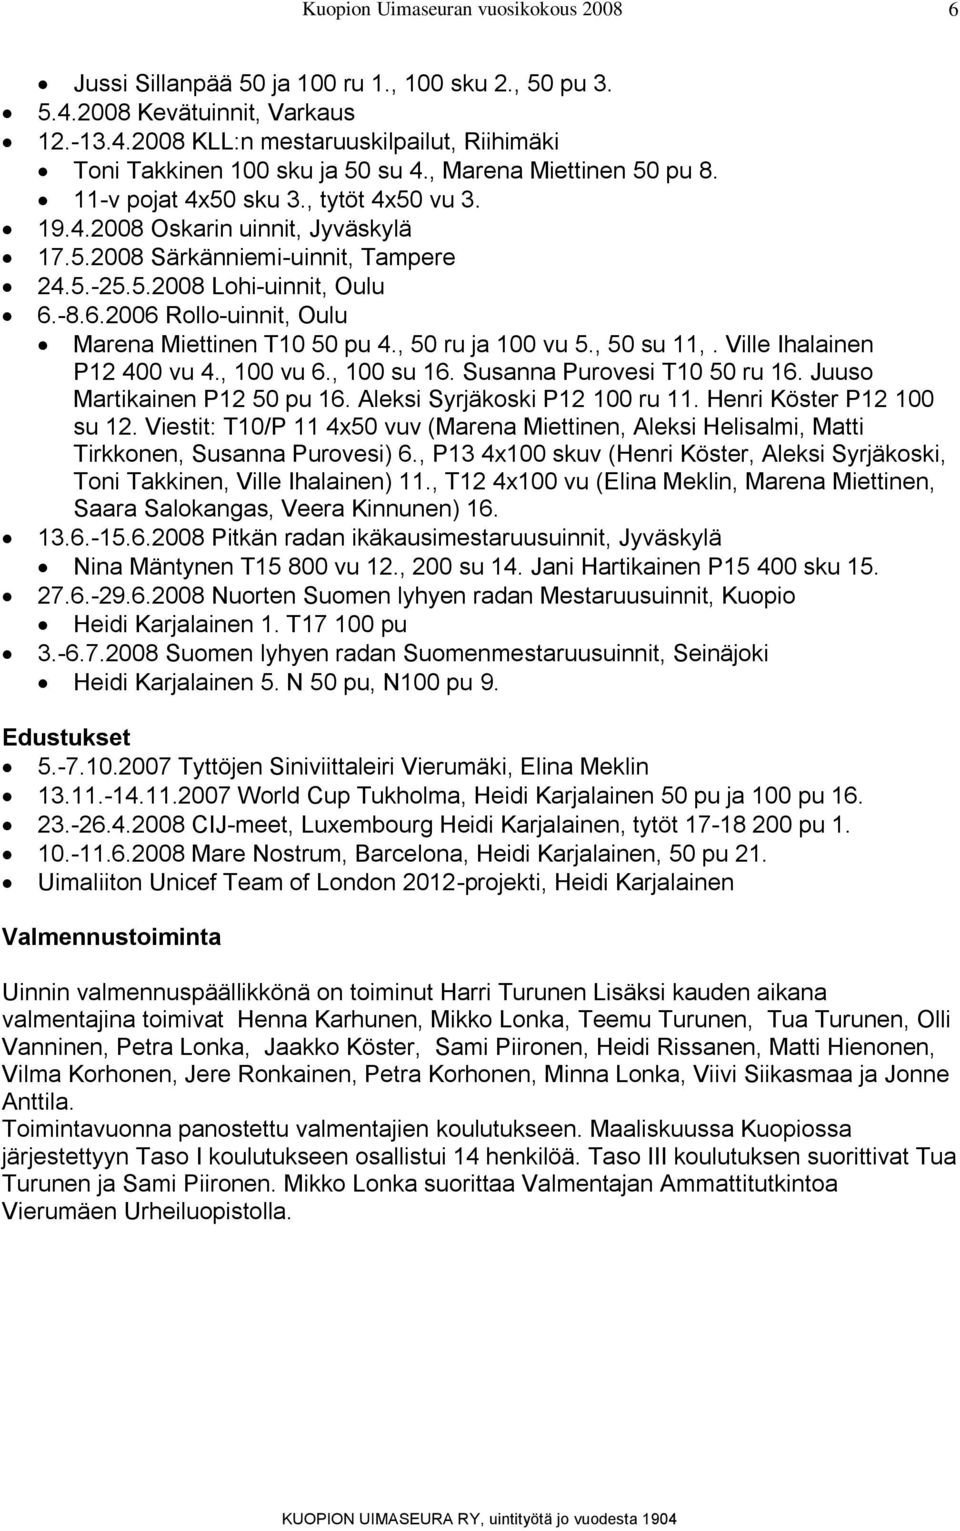 -8.6.2006 Rollo-uinnit, Oulu Marena Miettinen T10 50 pu 4., 50 ru ja 100 vu 5., 50 su 11,. Ville Ihalainen P12 400 vu 4., 100 vu 6., 100 su 16. Susanna Purovesi T10 50 ru 16.